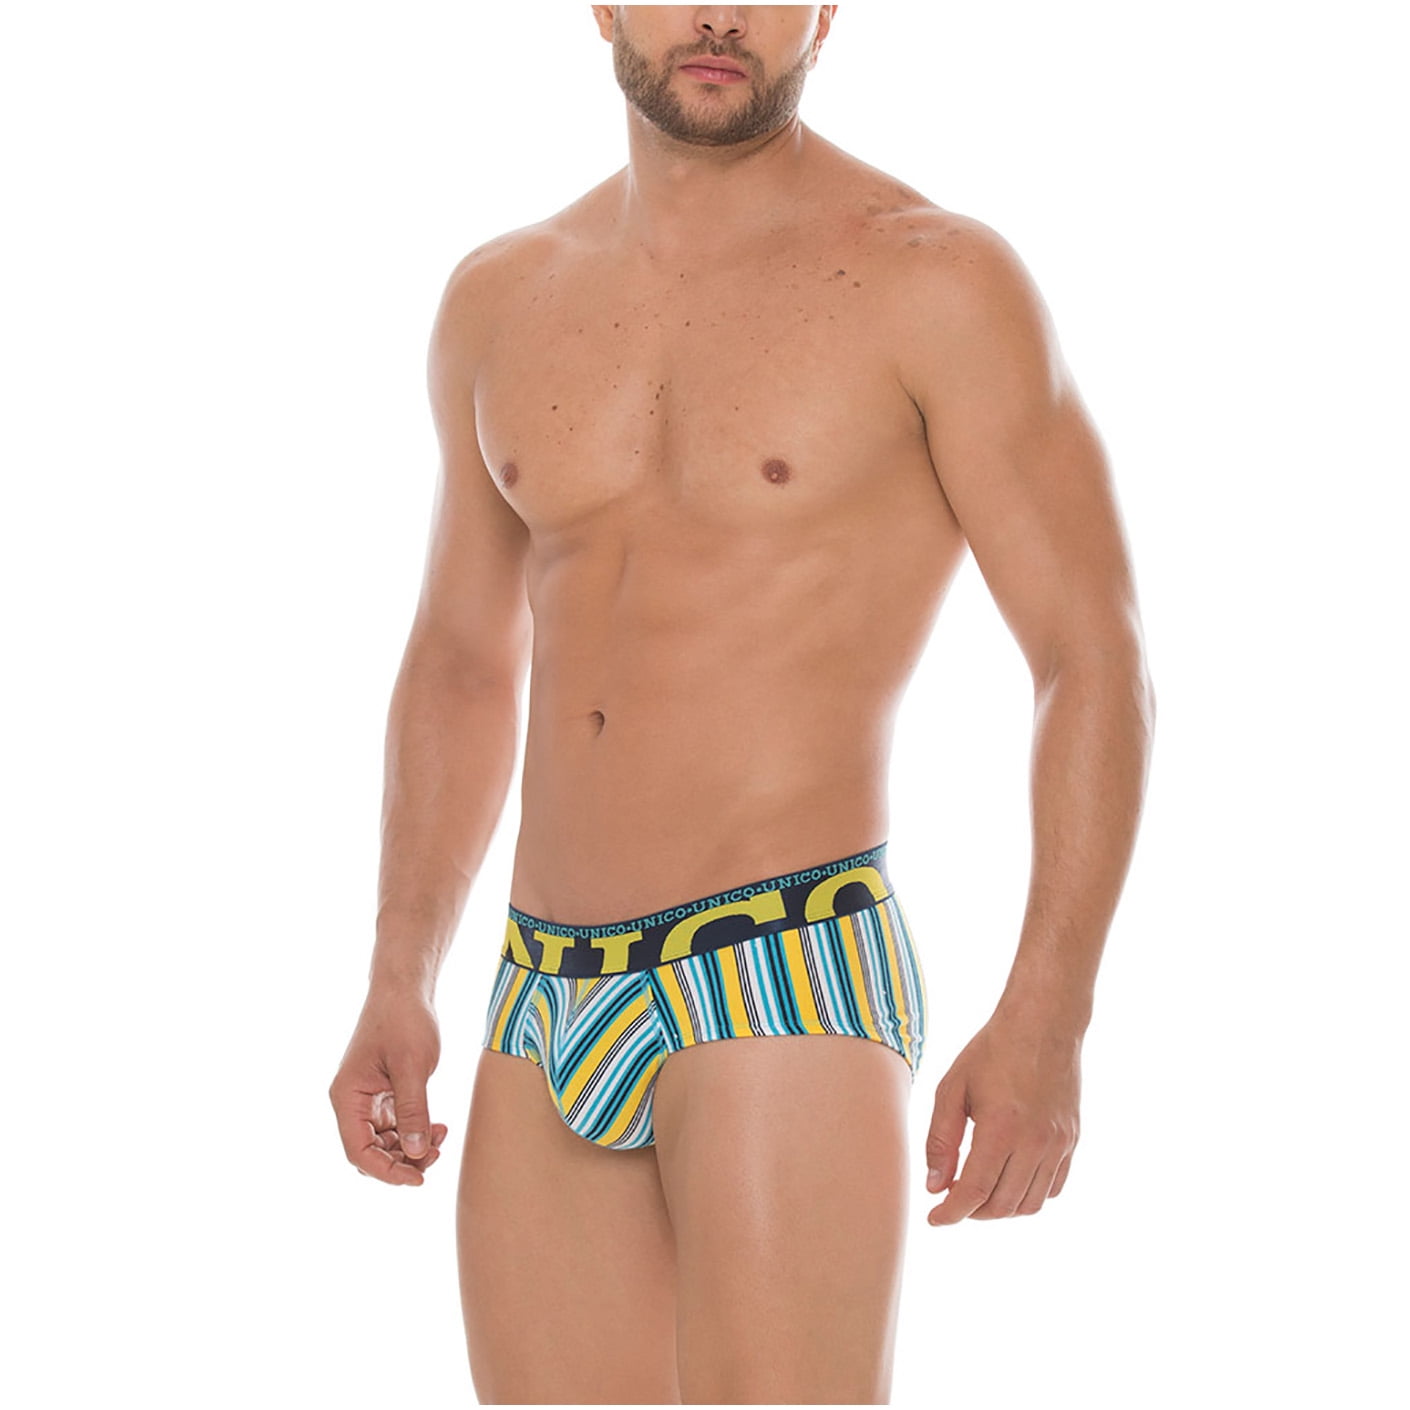 Mundo Unico Mens Underwear Cotton Briefs Stripes Calzoncillos para Hombres 